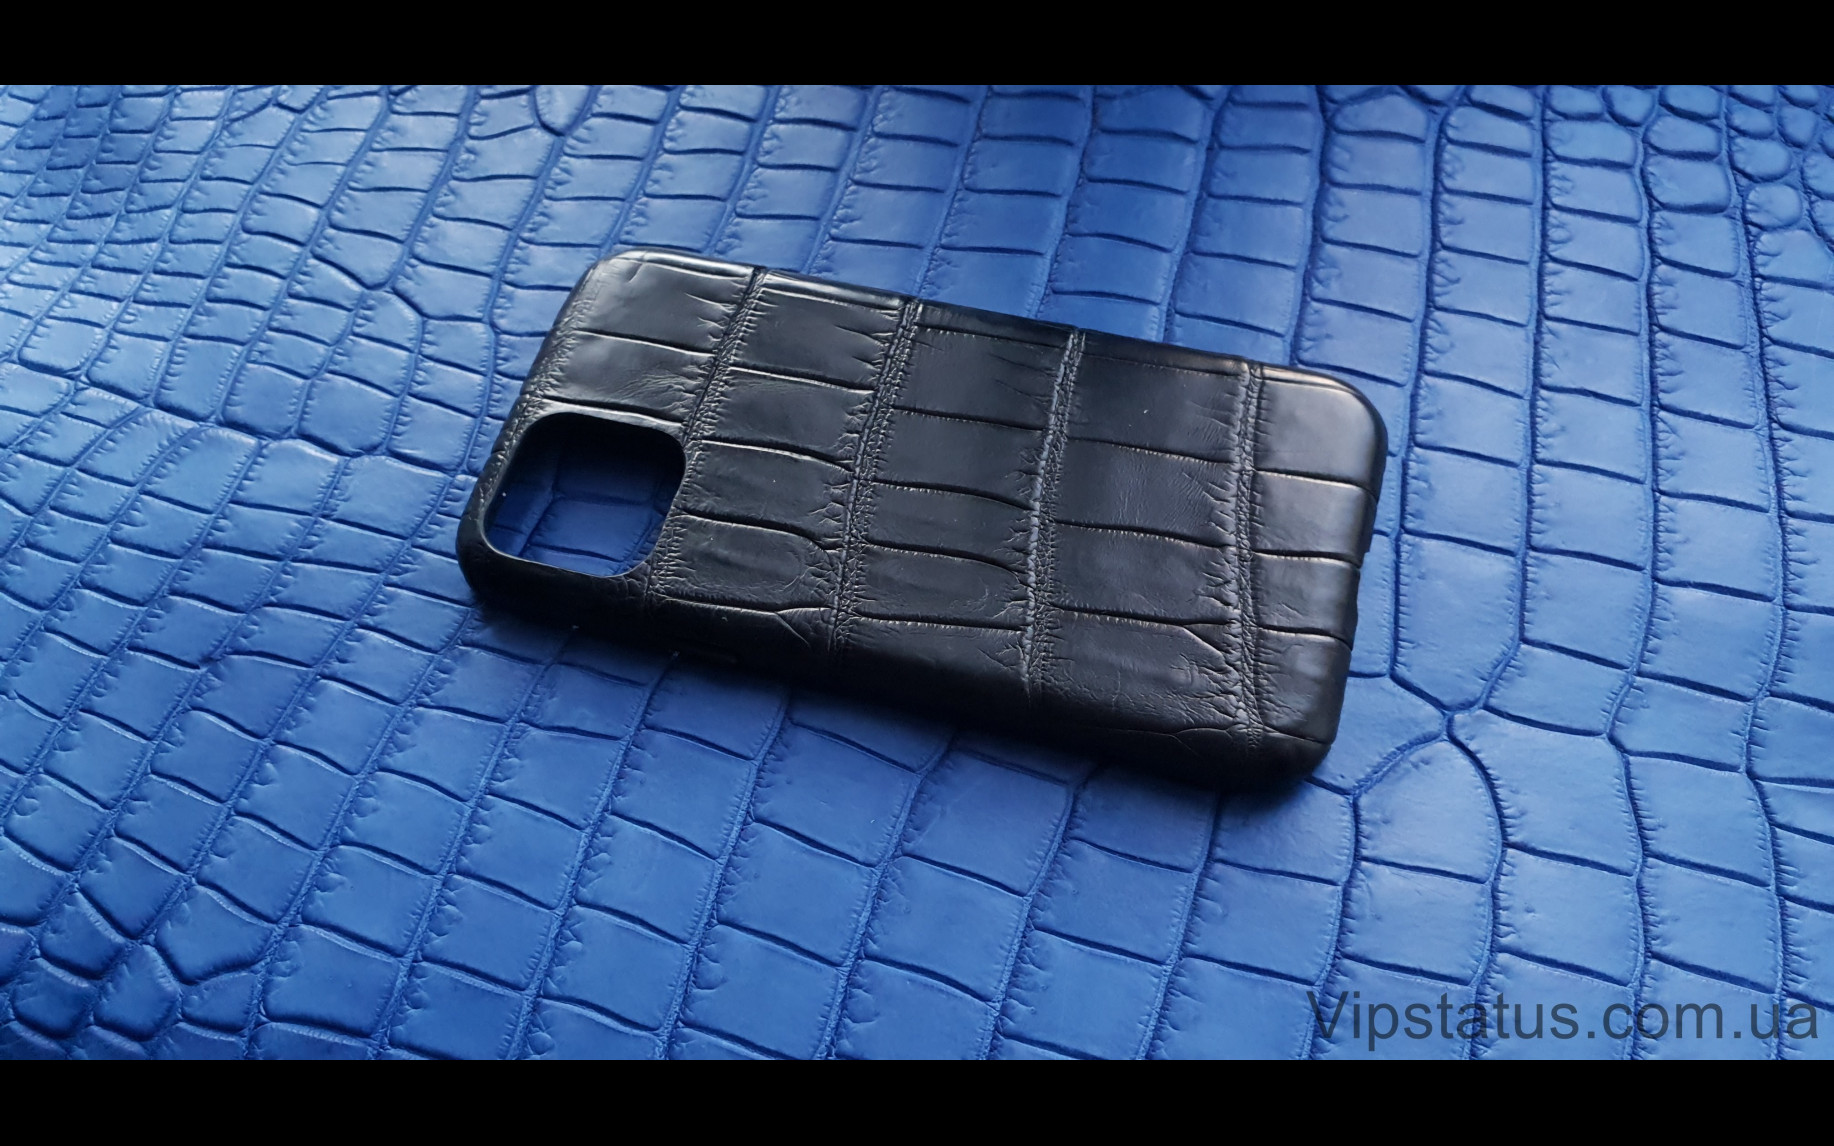 Elite Black Lord Эксклюзивный чехол IPhone 11 Pro кожа крокодила Black Lord Exclusive case IPhone 11 Pro Crocodile leather image 2